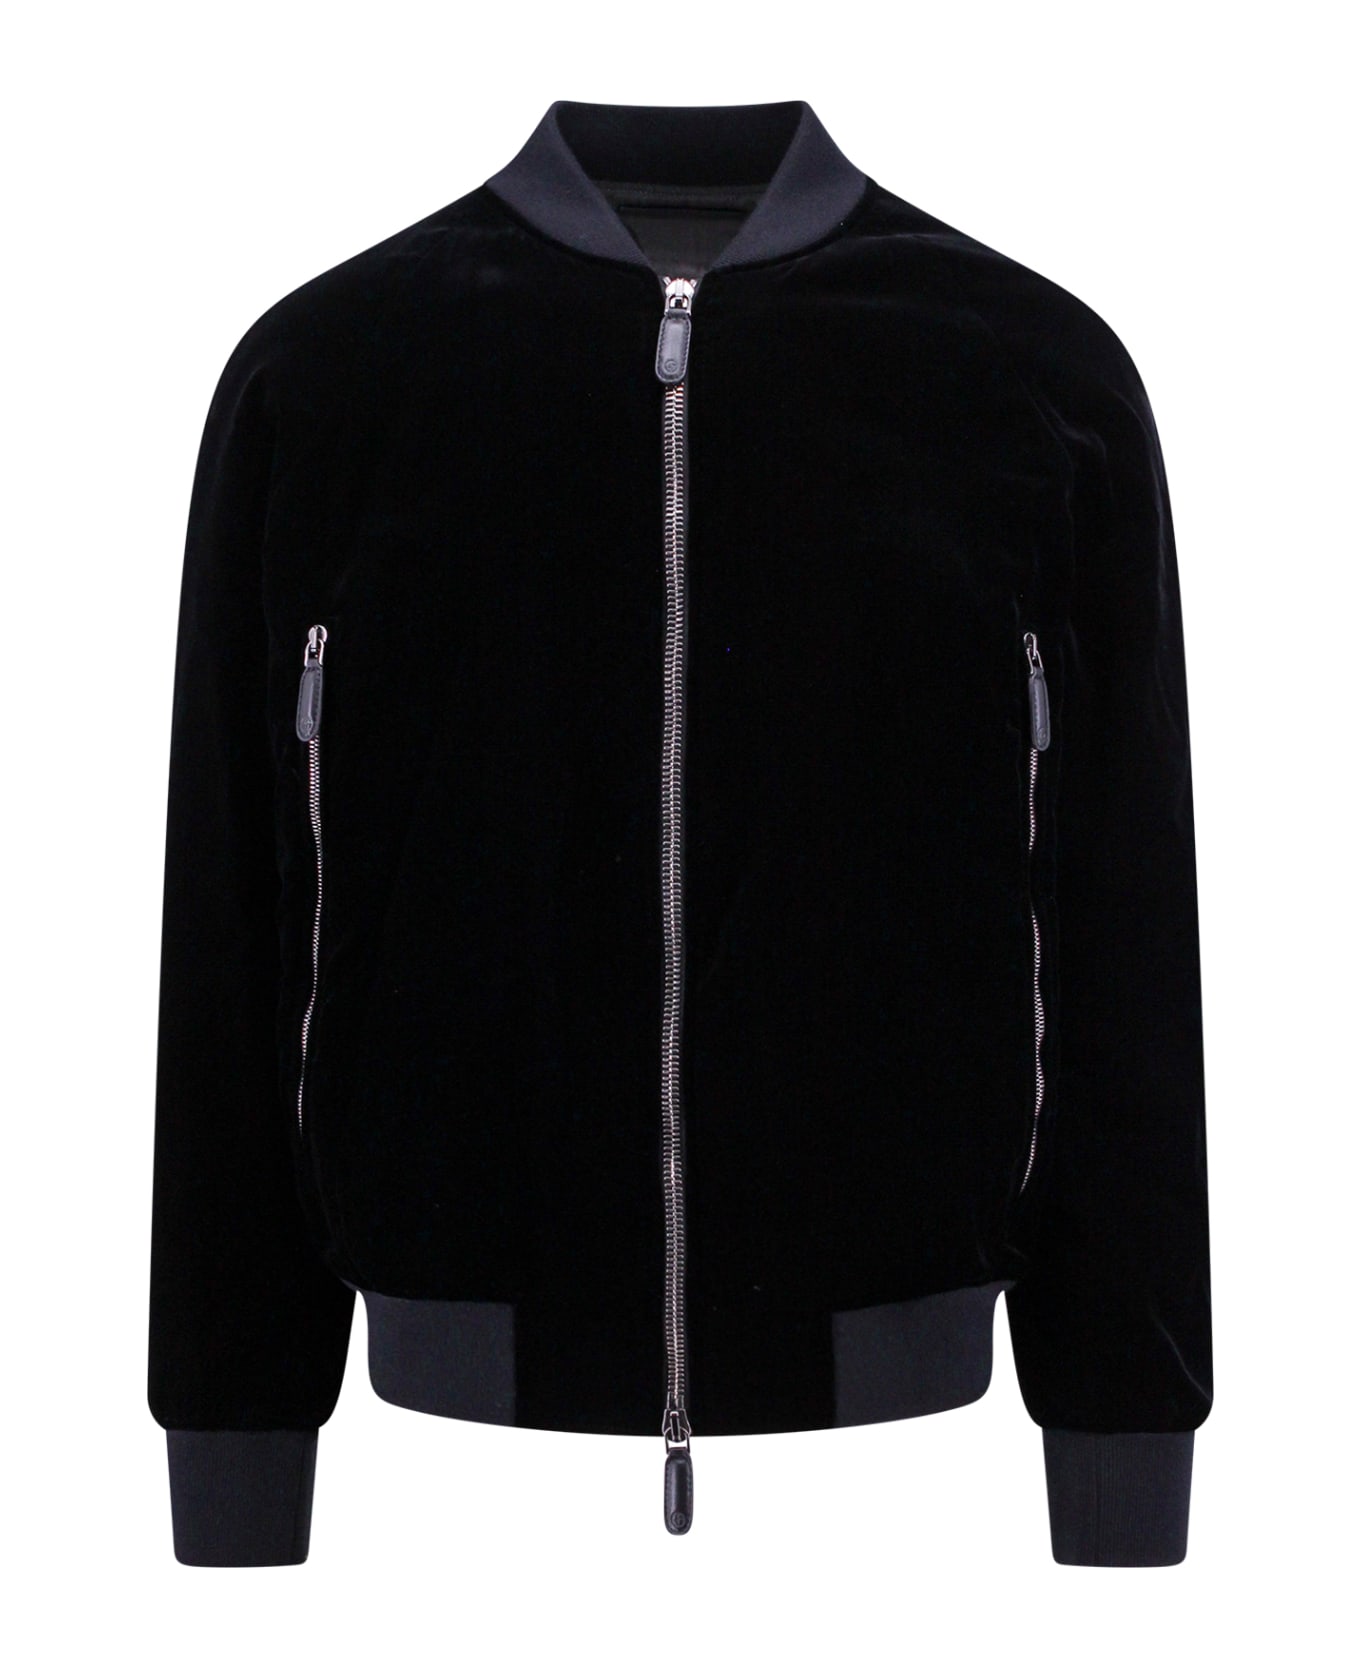 Giorgio Armani Jacket - Black ジャケット